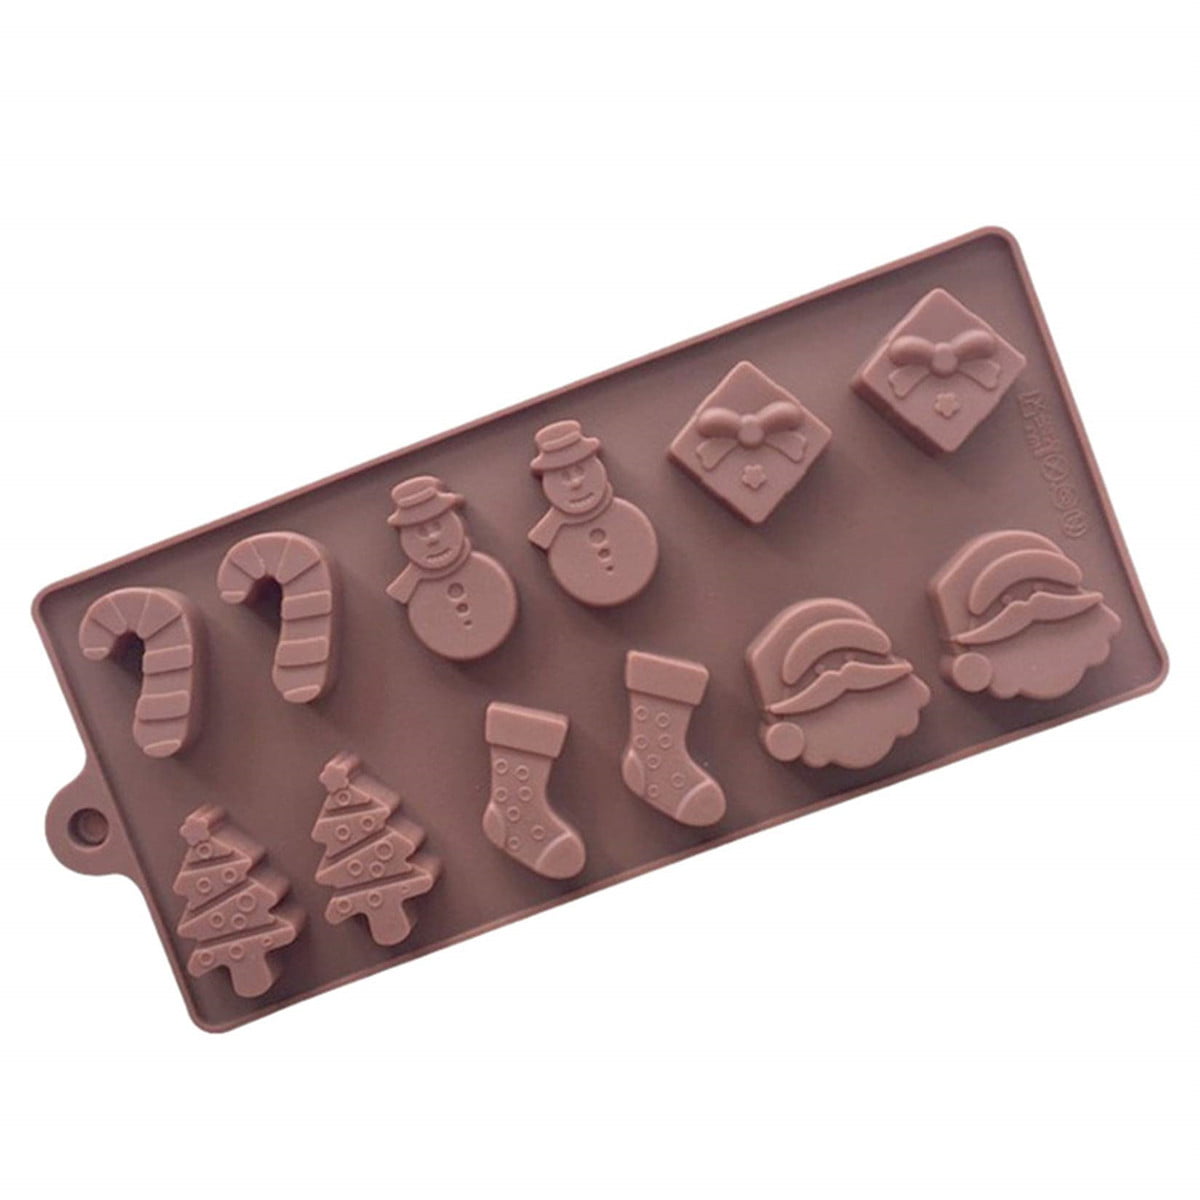 Koji set/2 Holiday Chocolate Mold